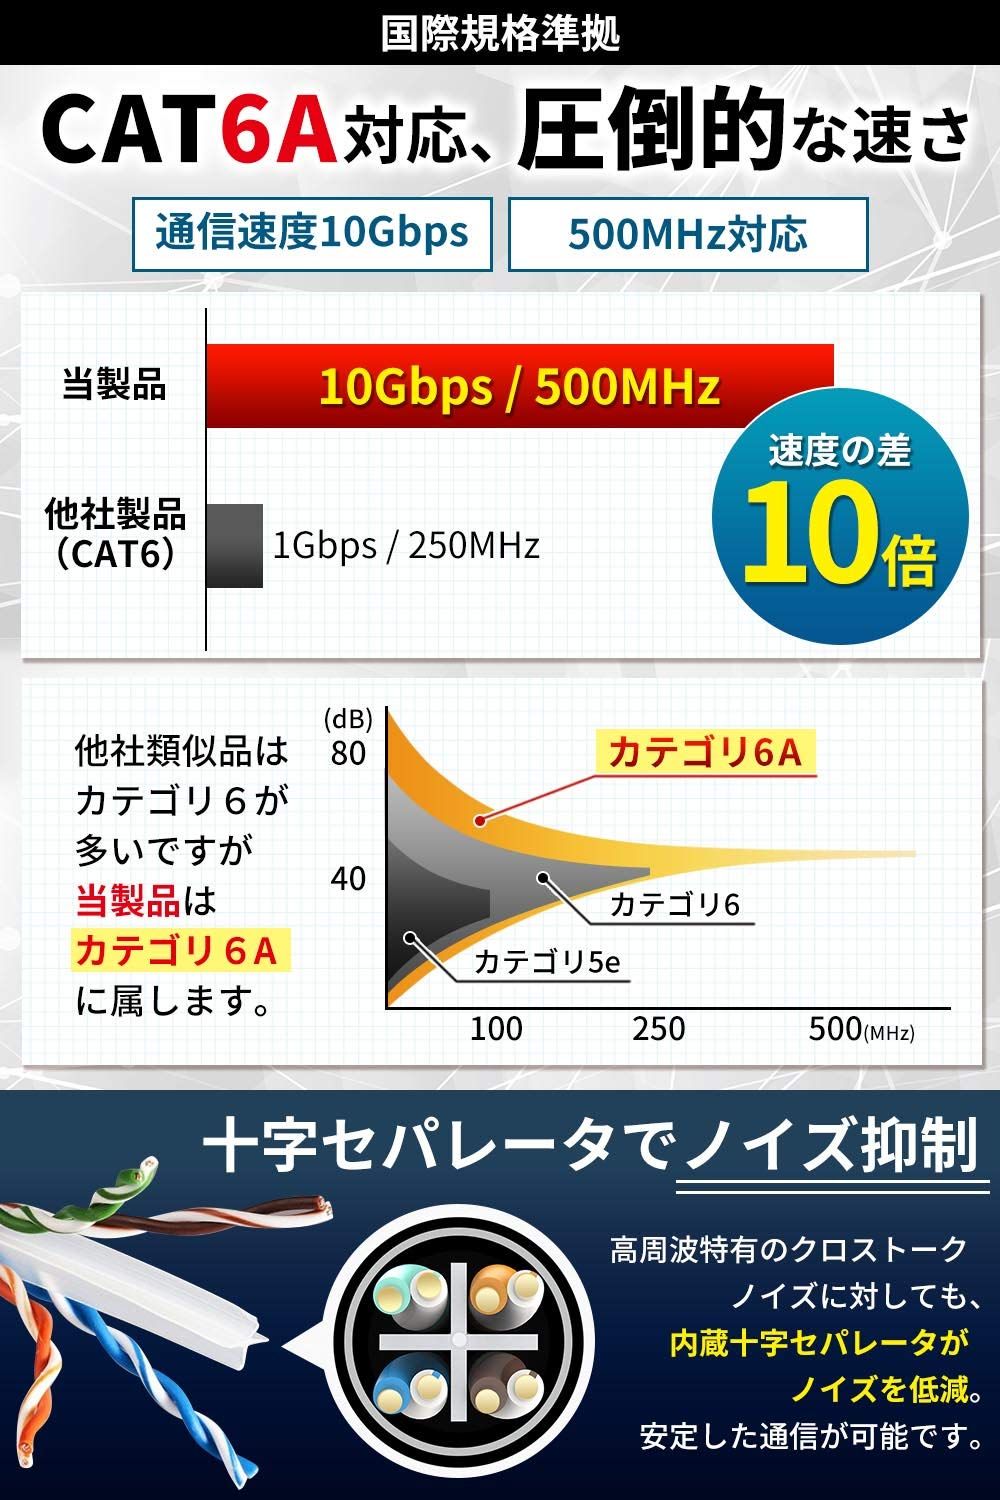 vacan 5m CAT6A 屋外用 LANケーブル 10Gbps ツメが折れない 高耐久30年